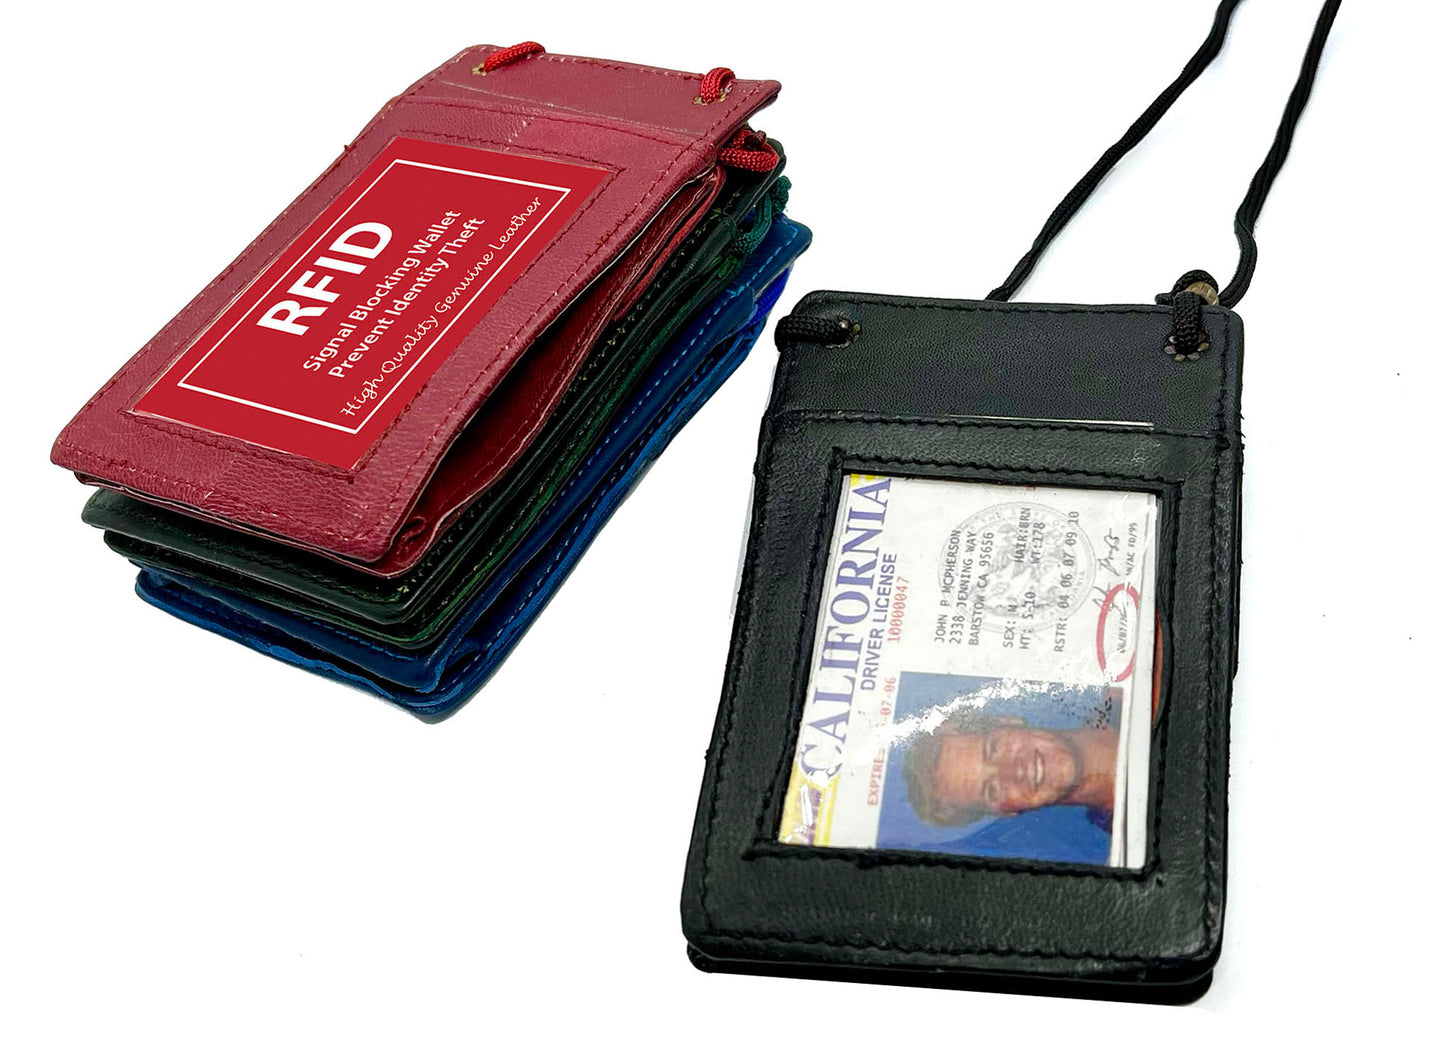 RFID Blocking Genuine Leather ID Badge Holder Credit Card Wallet with Lanyard Adjustable Neck Strap